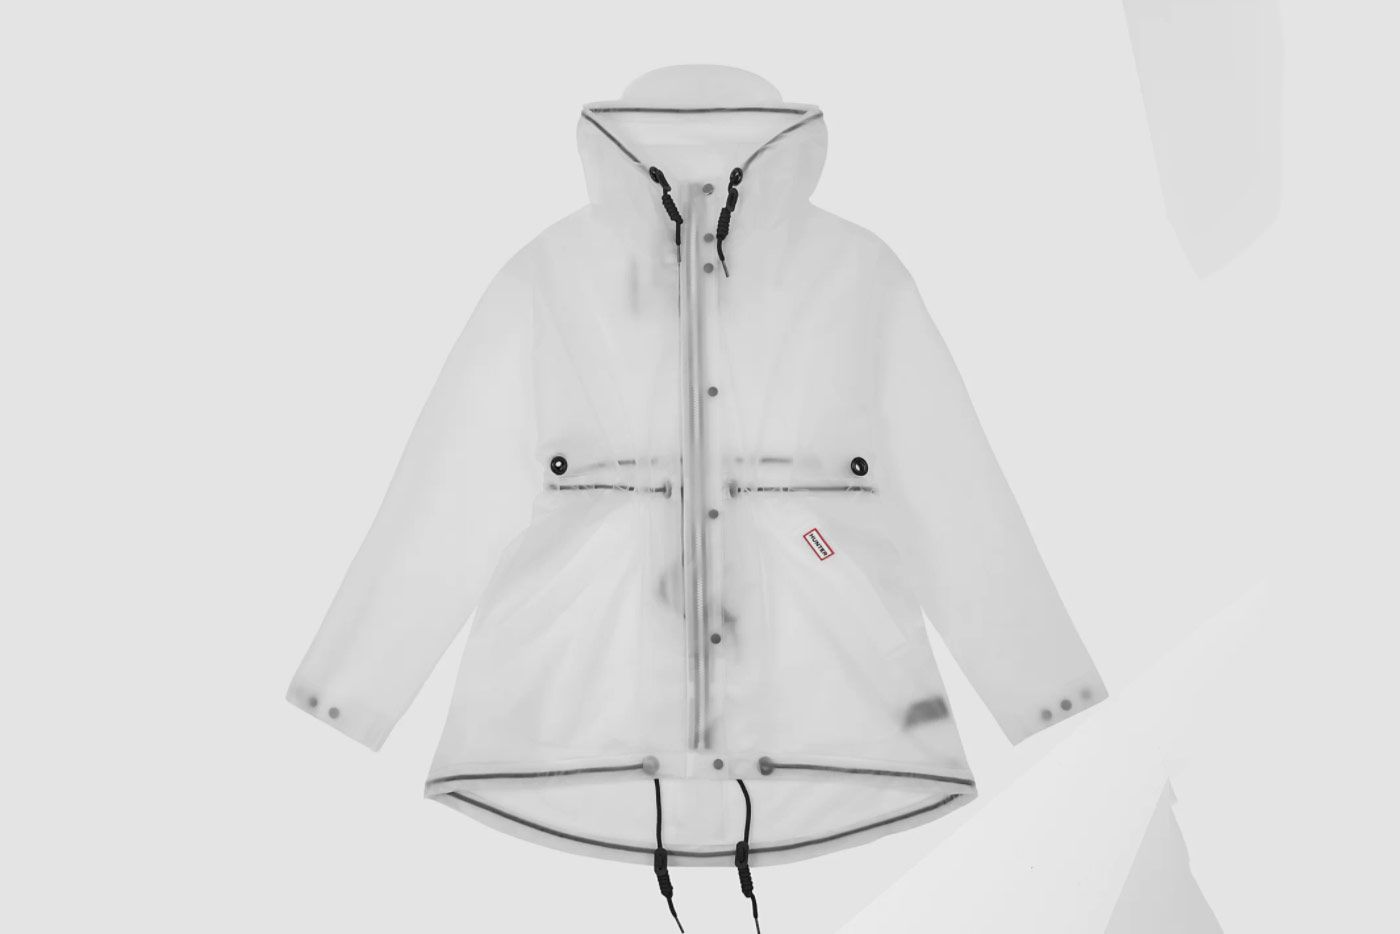 PAC-A-MAC for Ladies Nylon Rain Shower Proof Outdoor Coat Jacket 4 Colors 12-24 